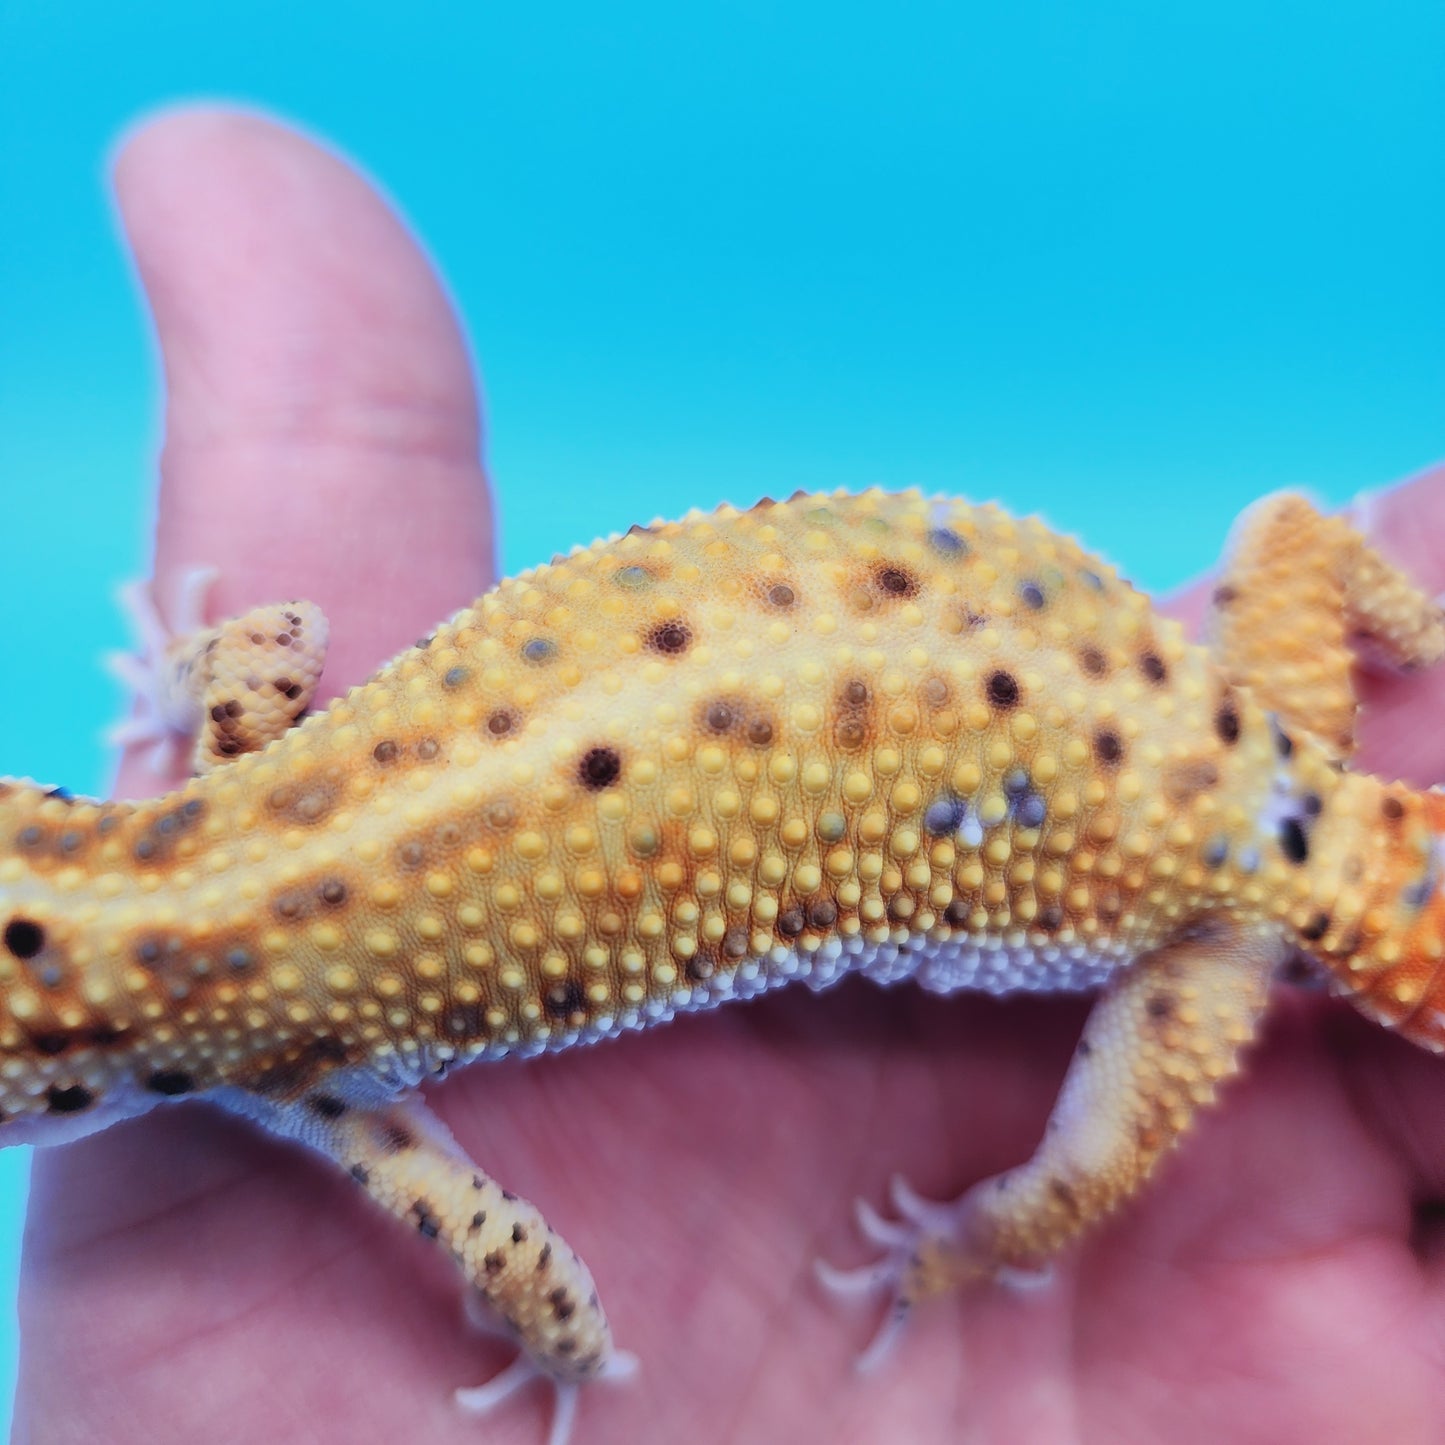 Male Manferno Bold Possible White & Yellow Leopard Gecko